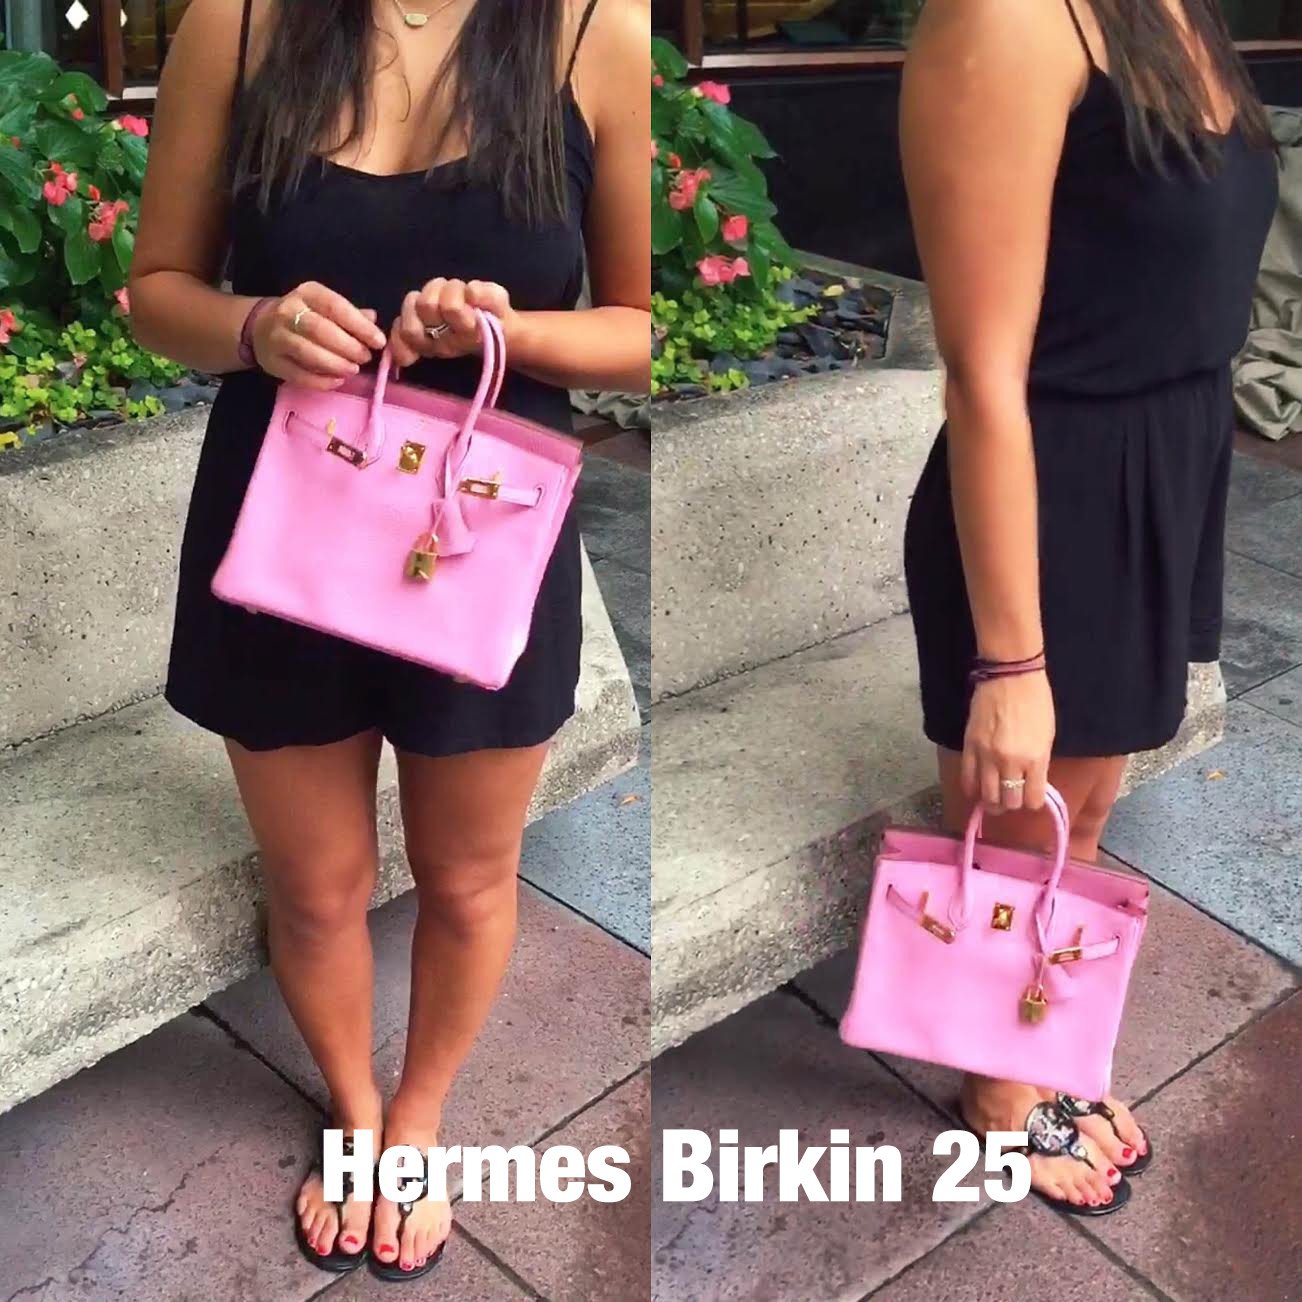 Hermes Birkin Size Comparison - PurseBop